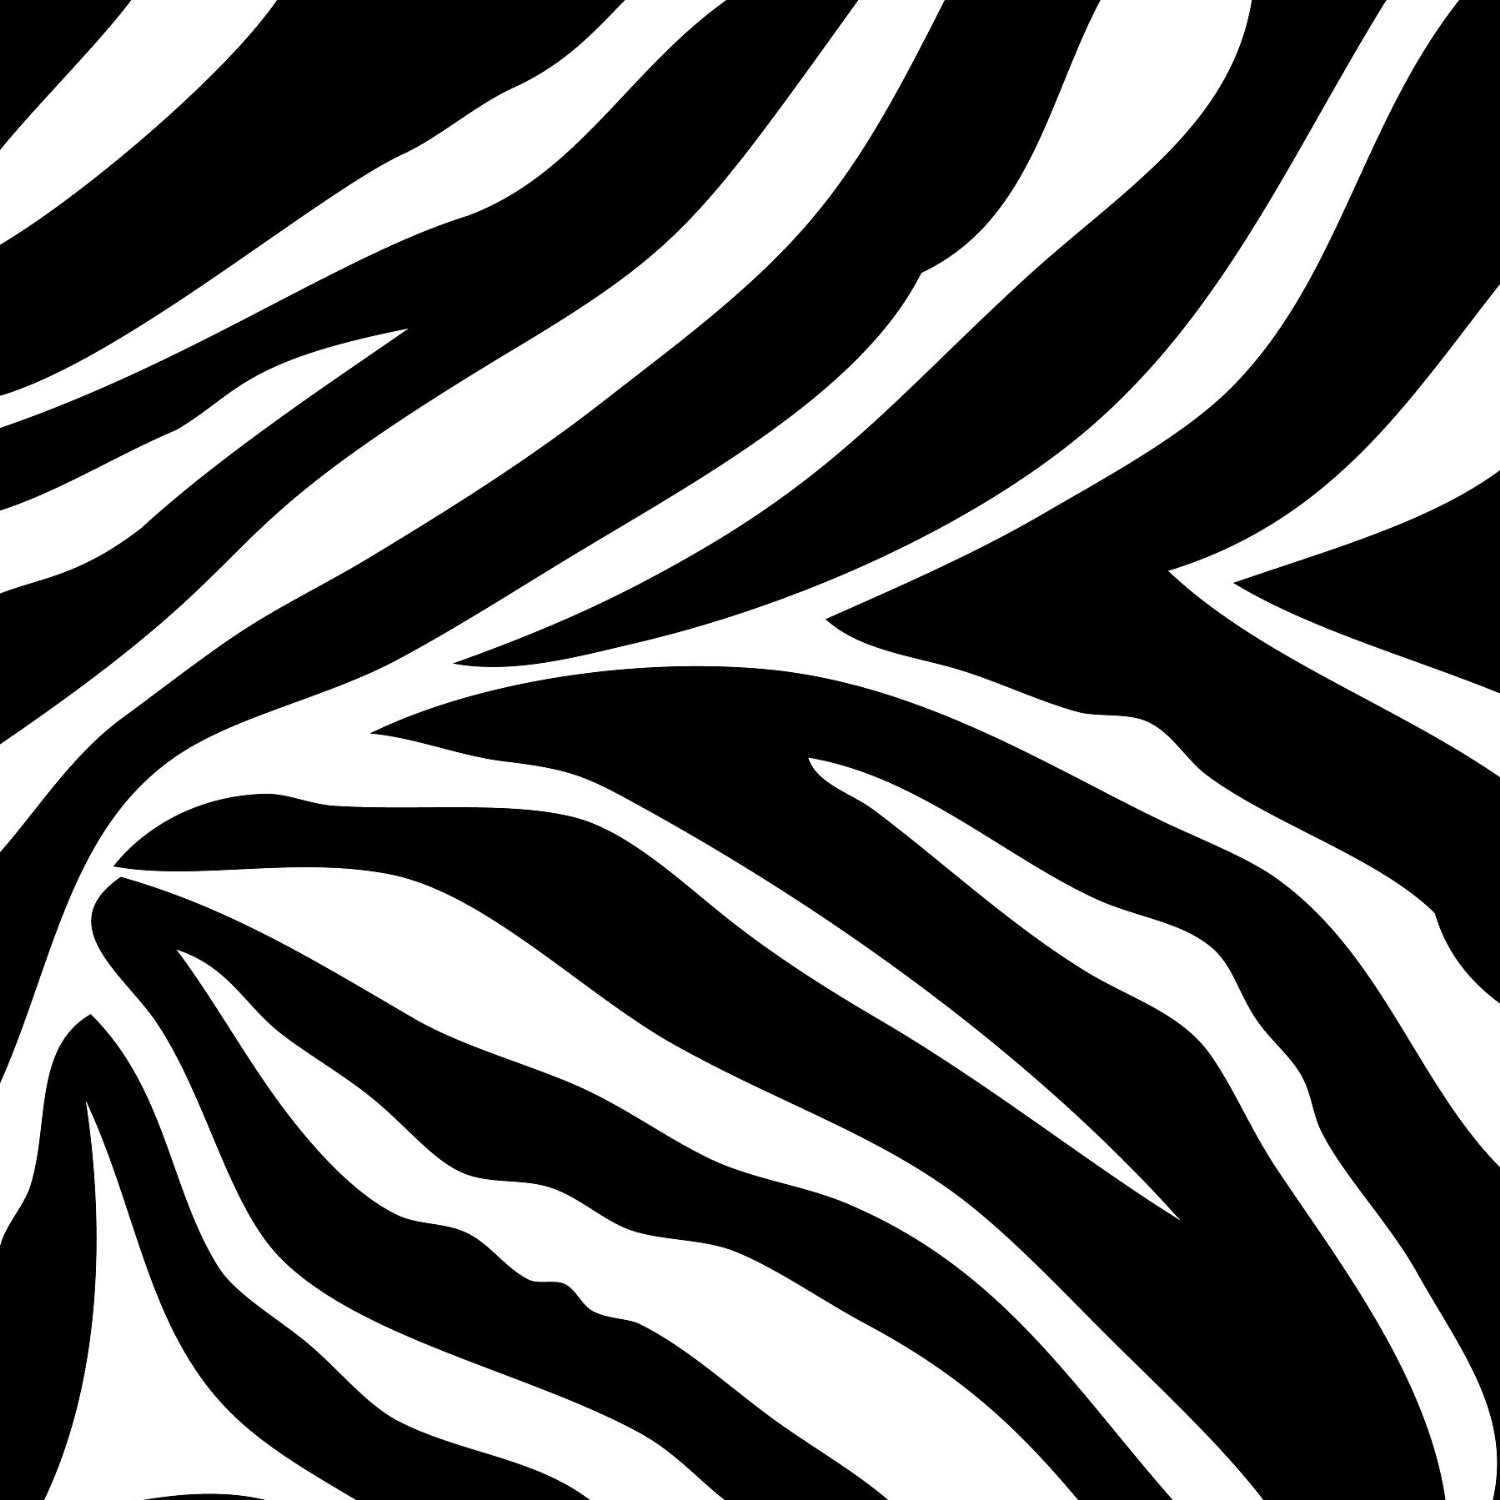 Zebra Print Vector Art | .